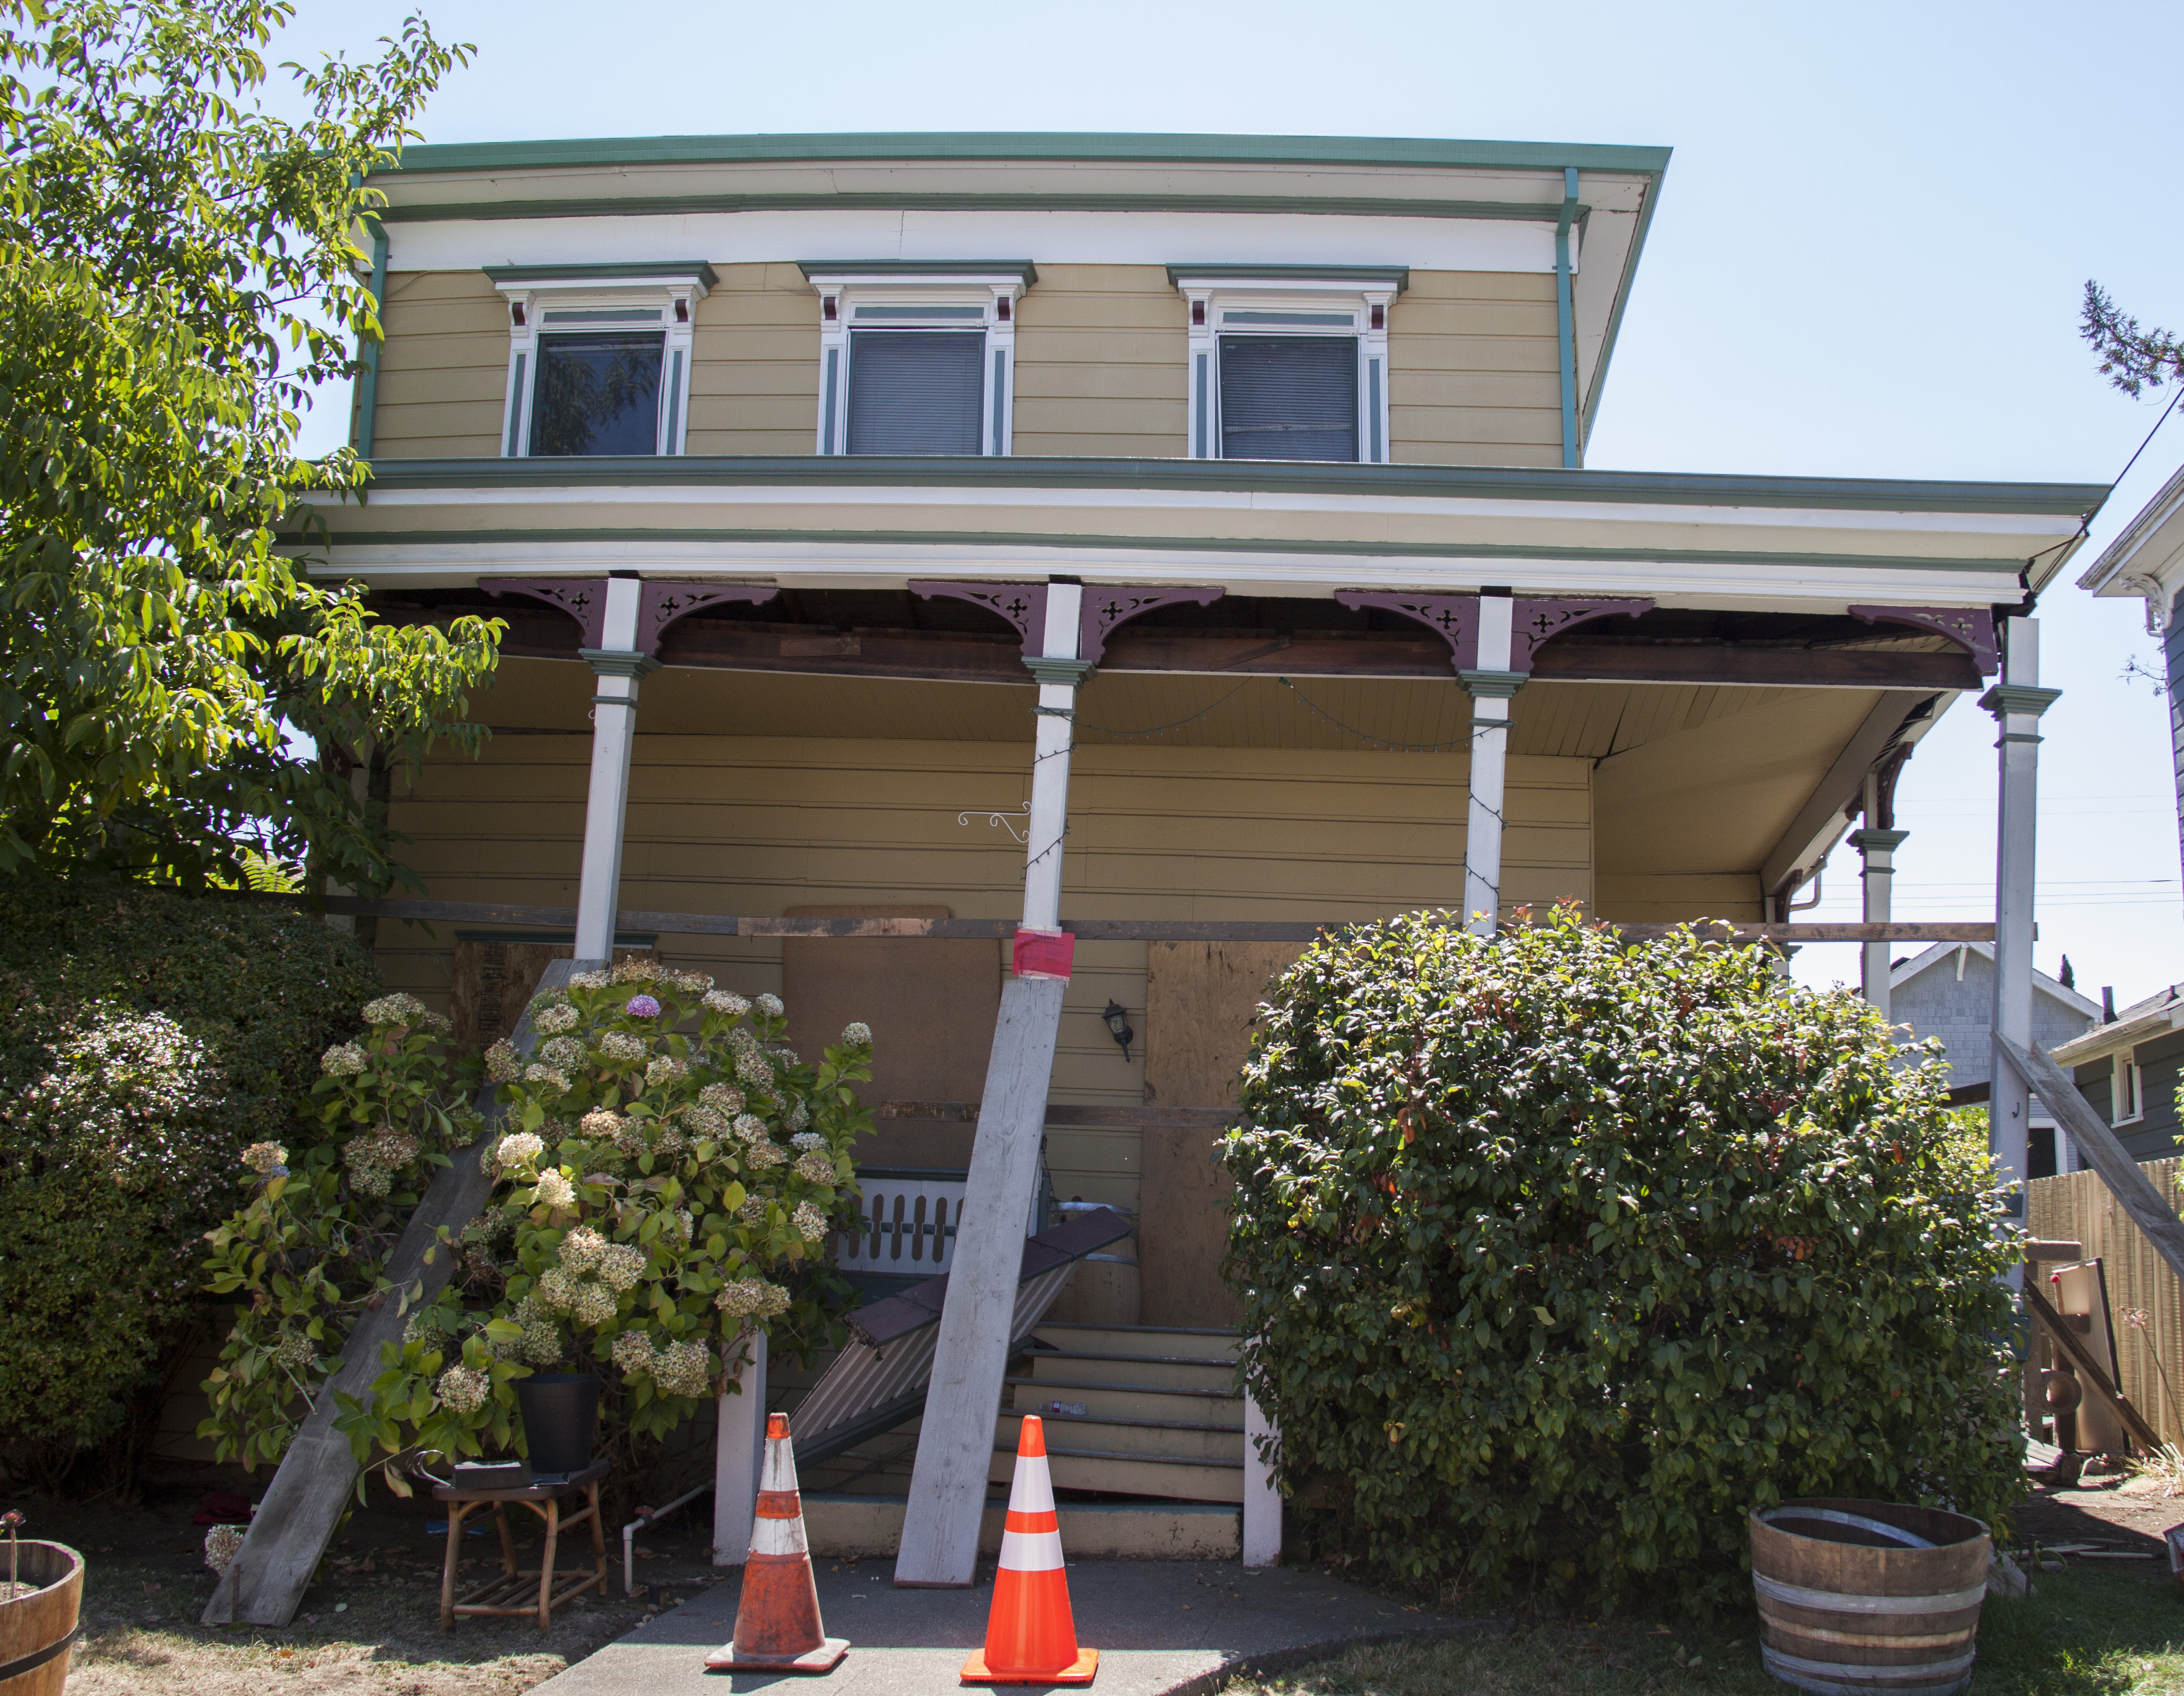 Image: 2014 South Napa Earthquake House Damage